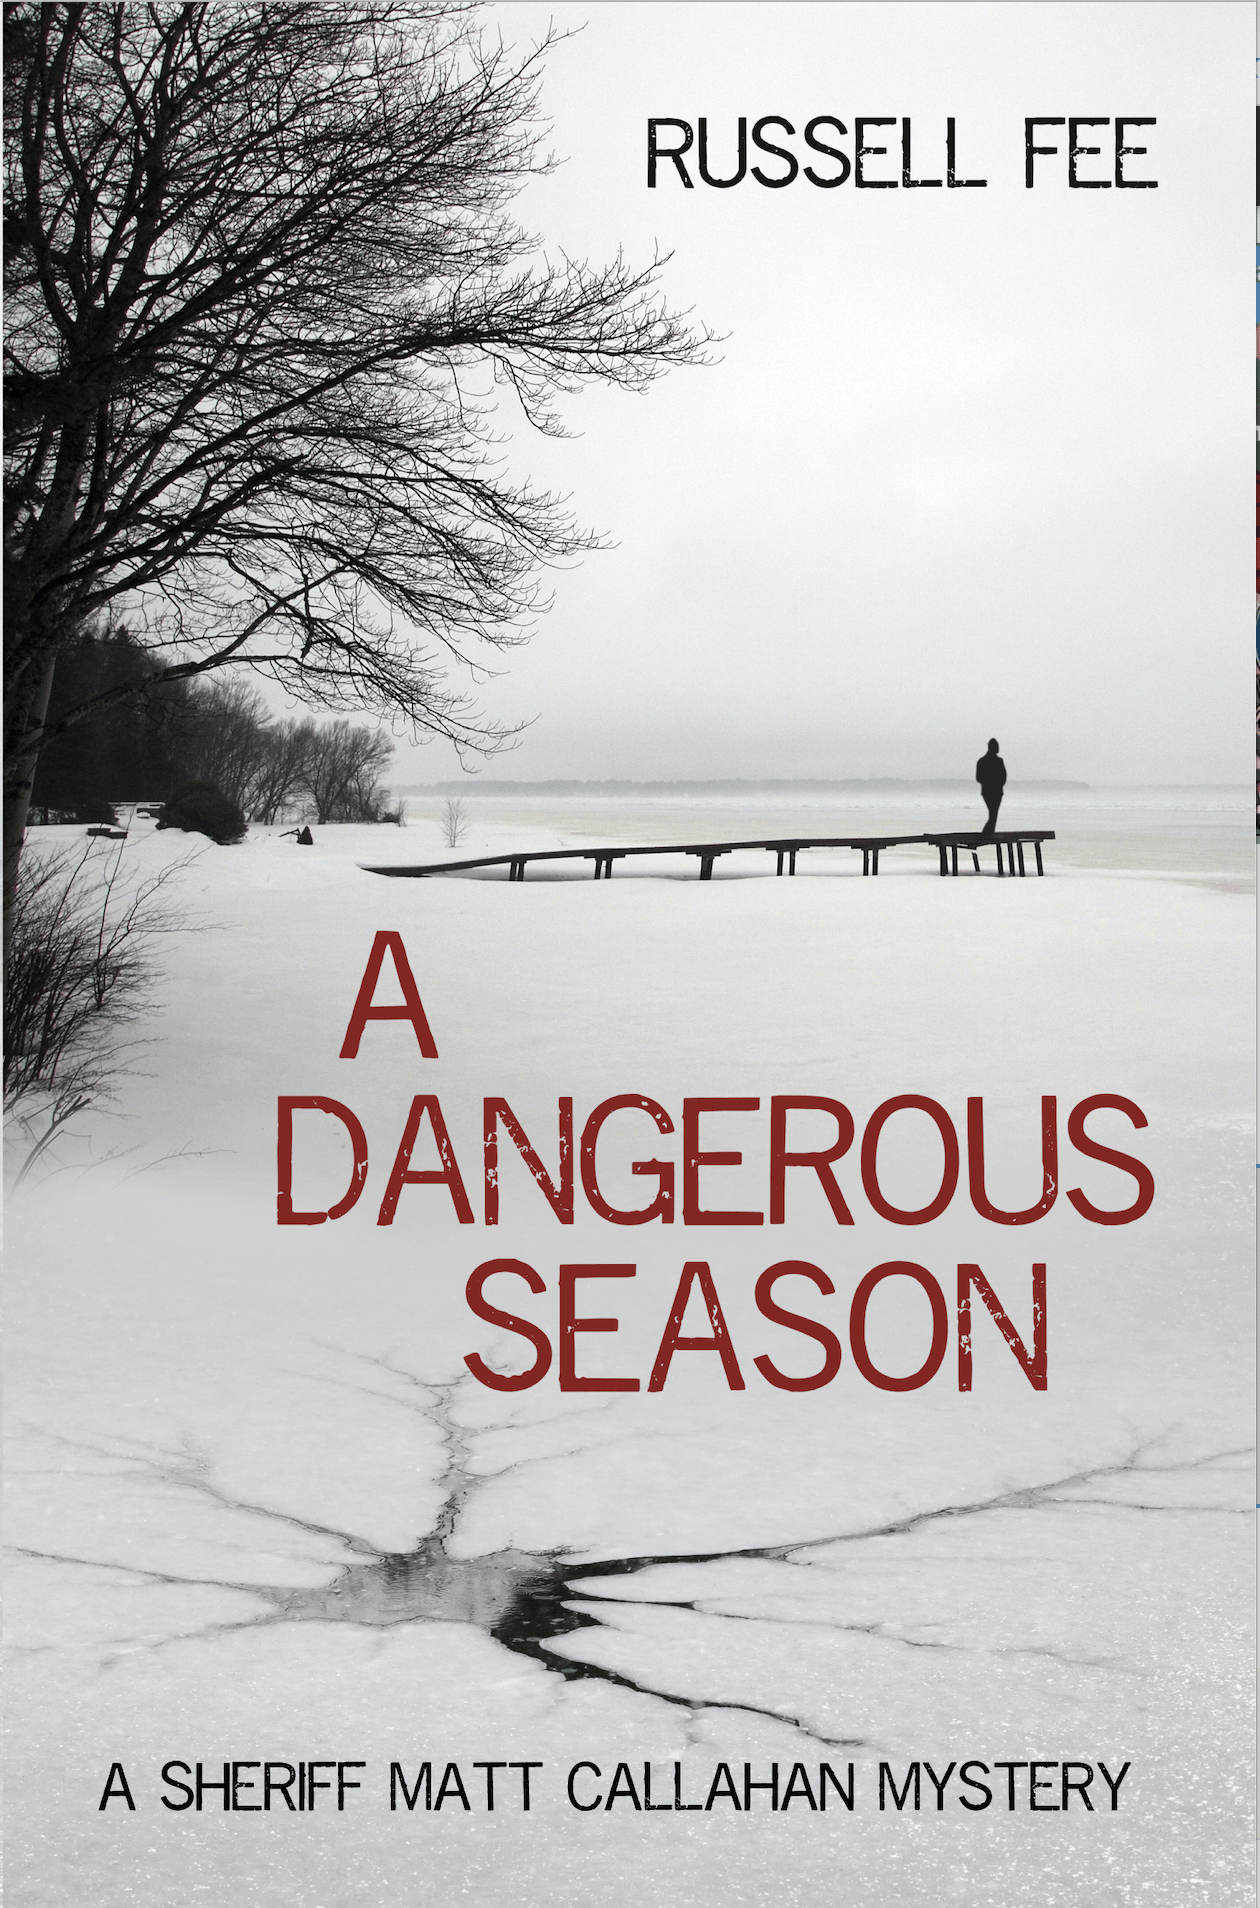 A Dangerous Season - A Sheriff Matt Callahan Mystery by Russell Fee